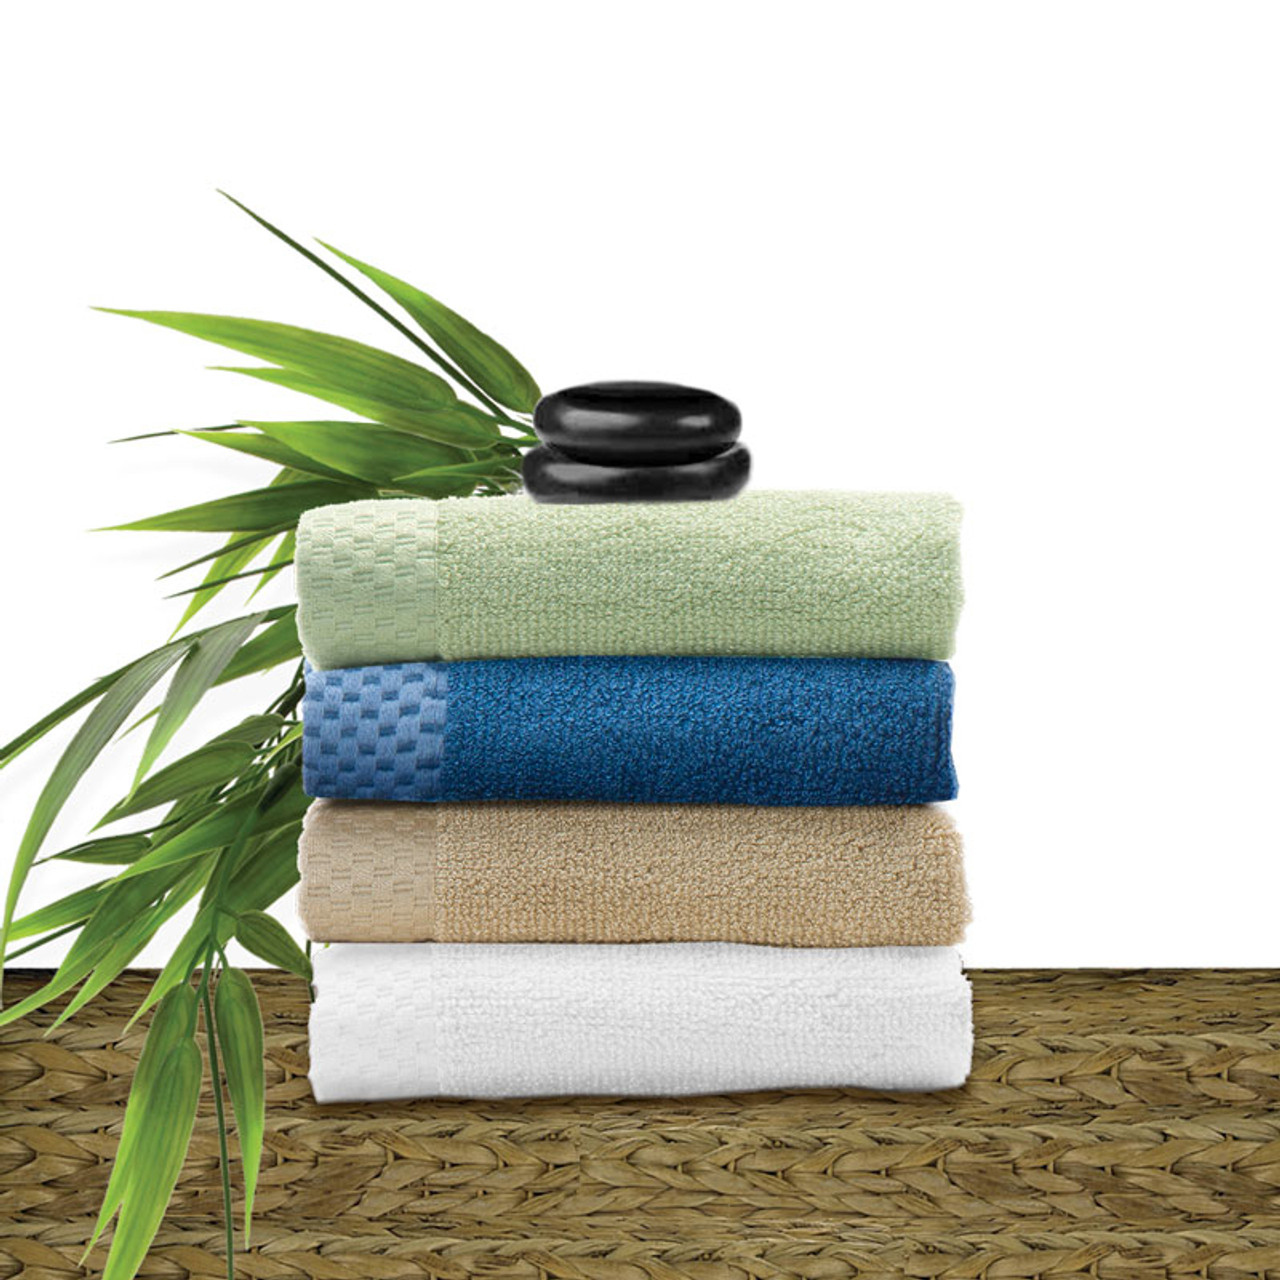 Cheap Cotton Bamboo Big Extra Large Bath Towel For Home Hotel - Buy Cheap  Cotton Bamboo Big Extra Large Bath Towel For Home Hotel Product on